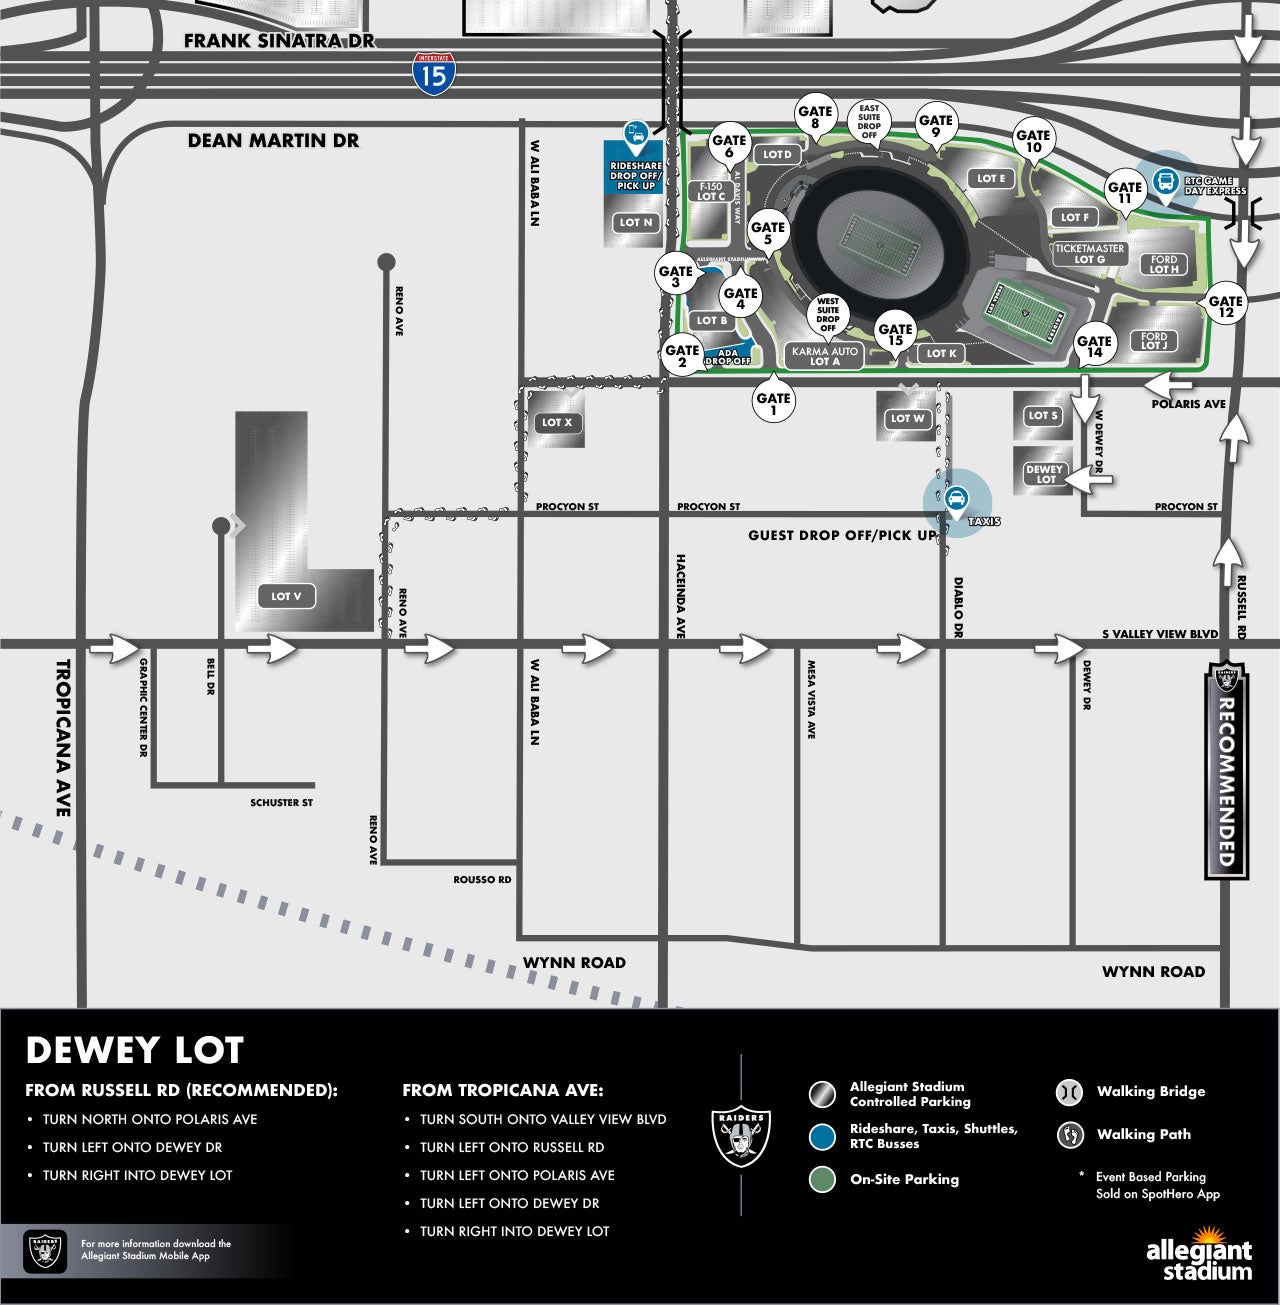 Dewey Lot Parking Map